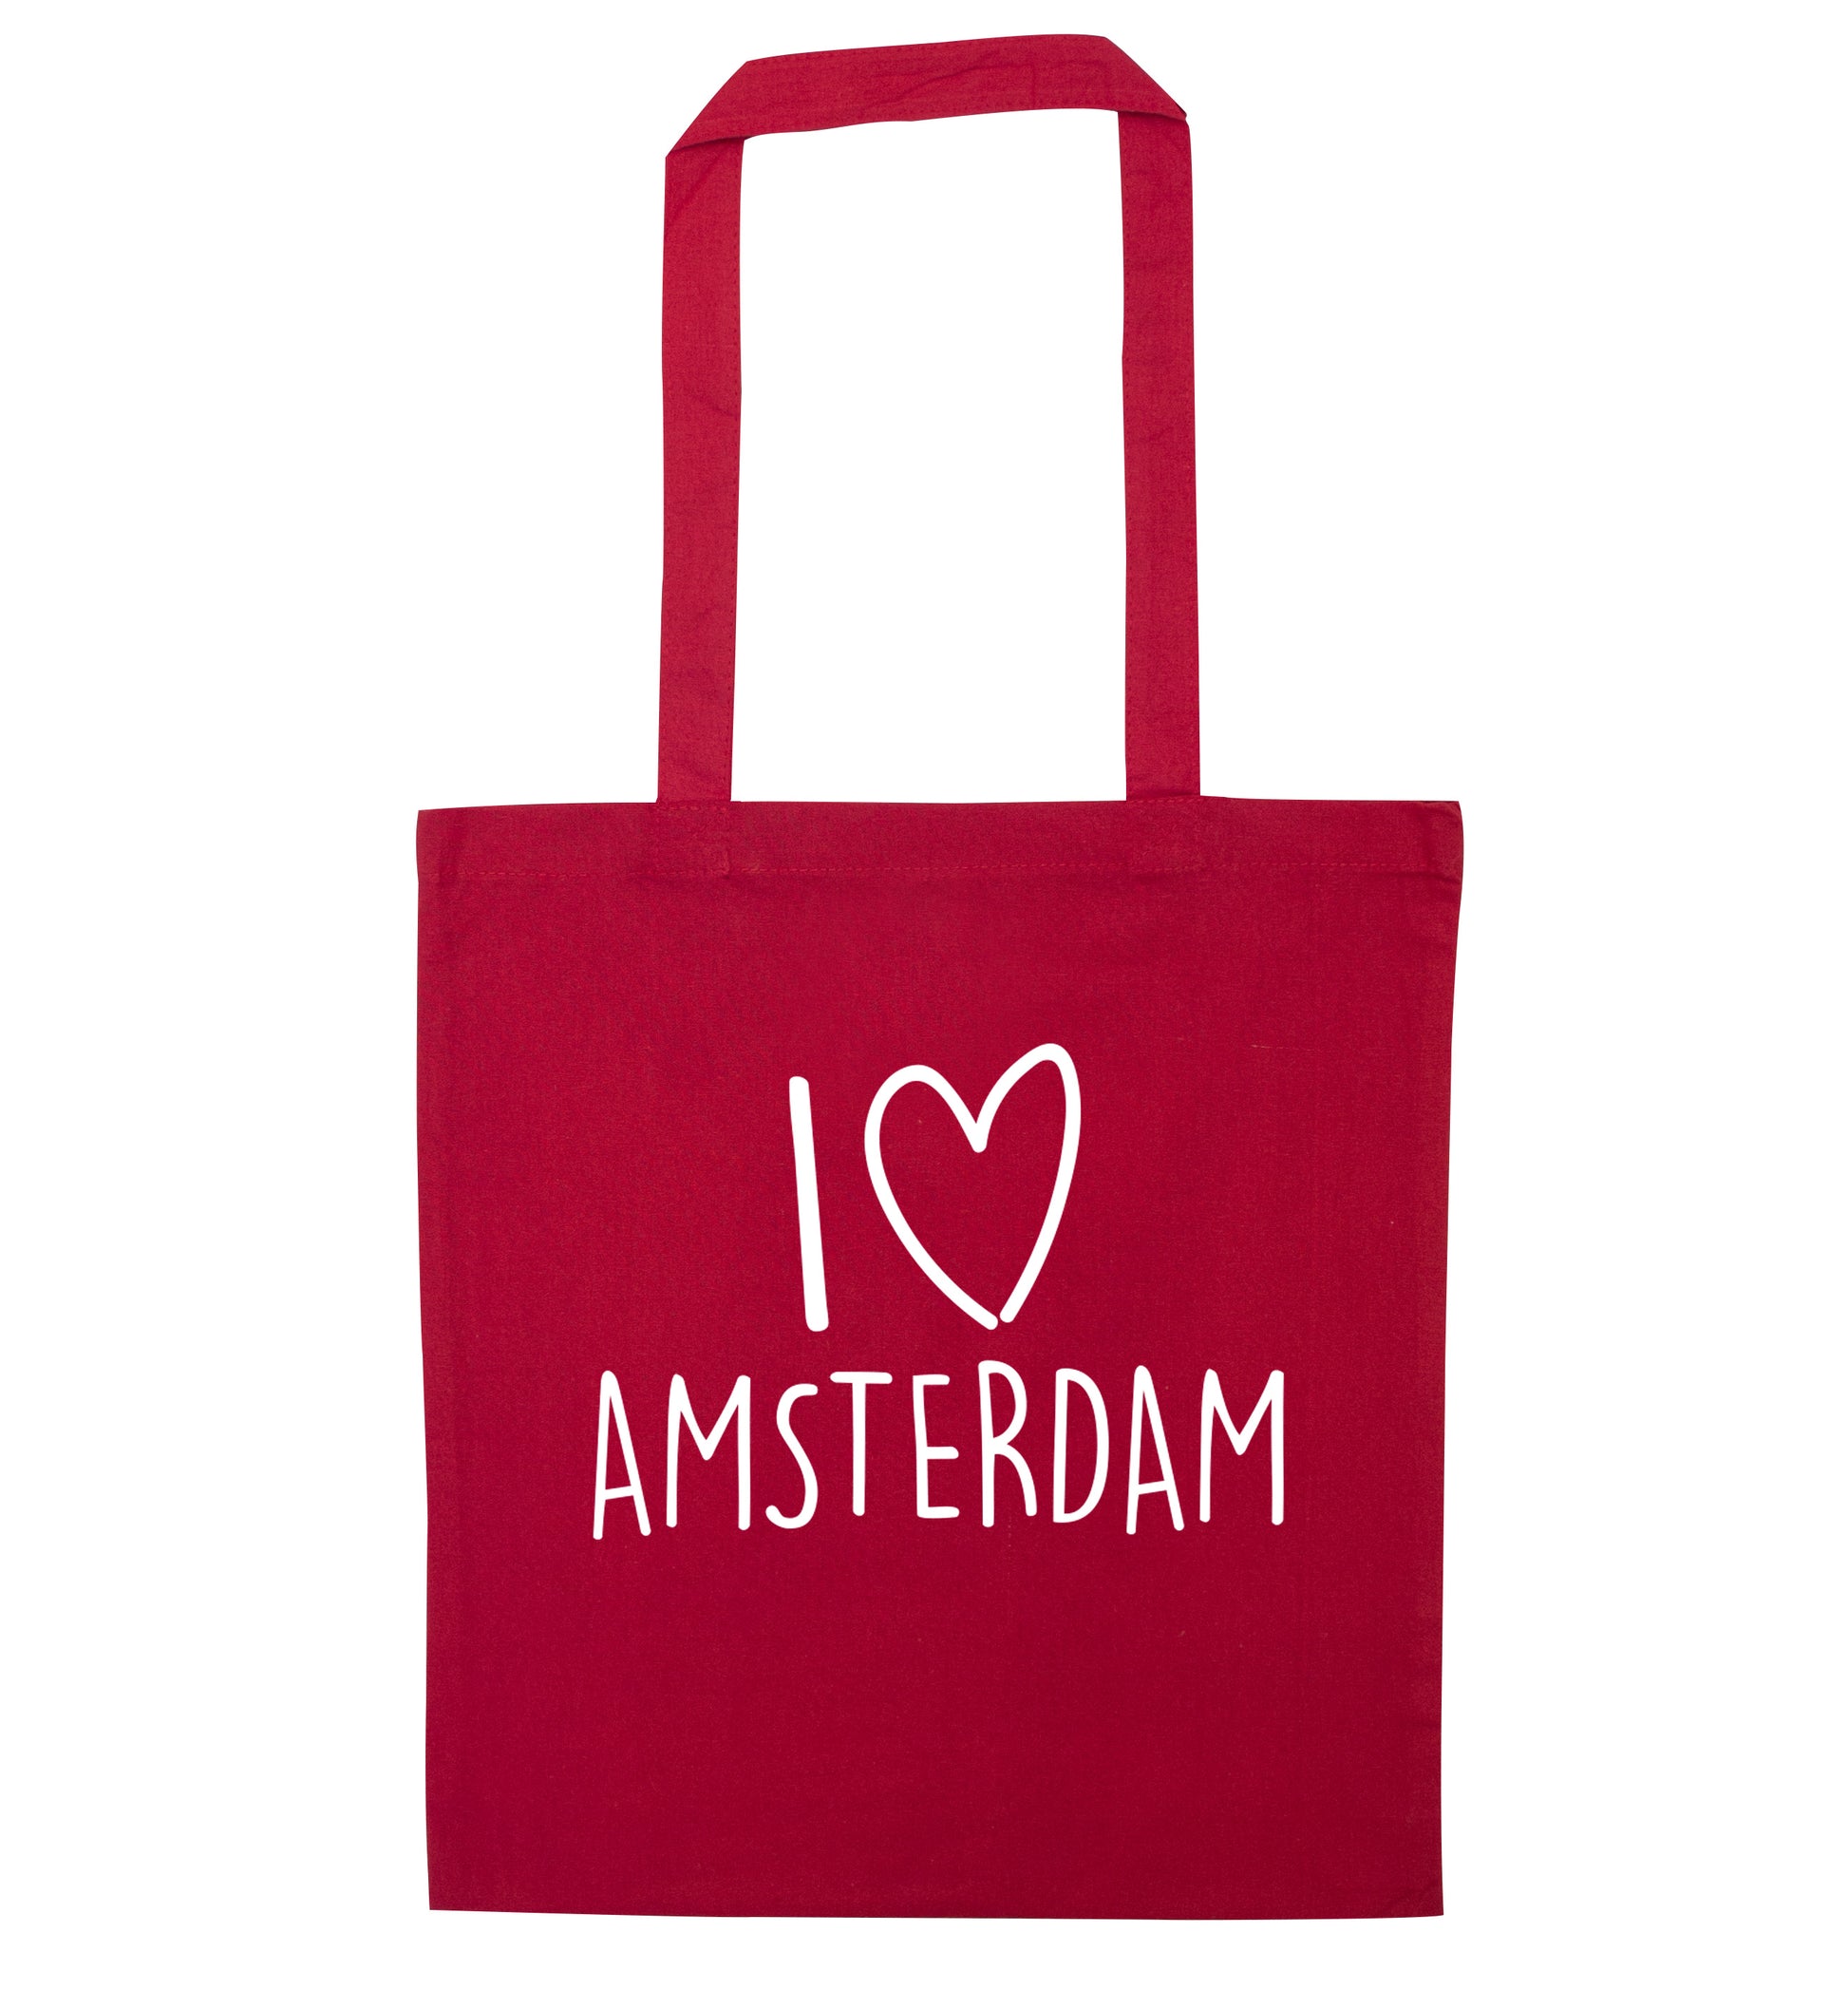 I love Amsterdam red tote bag